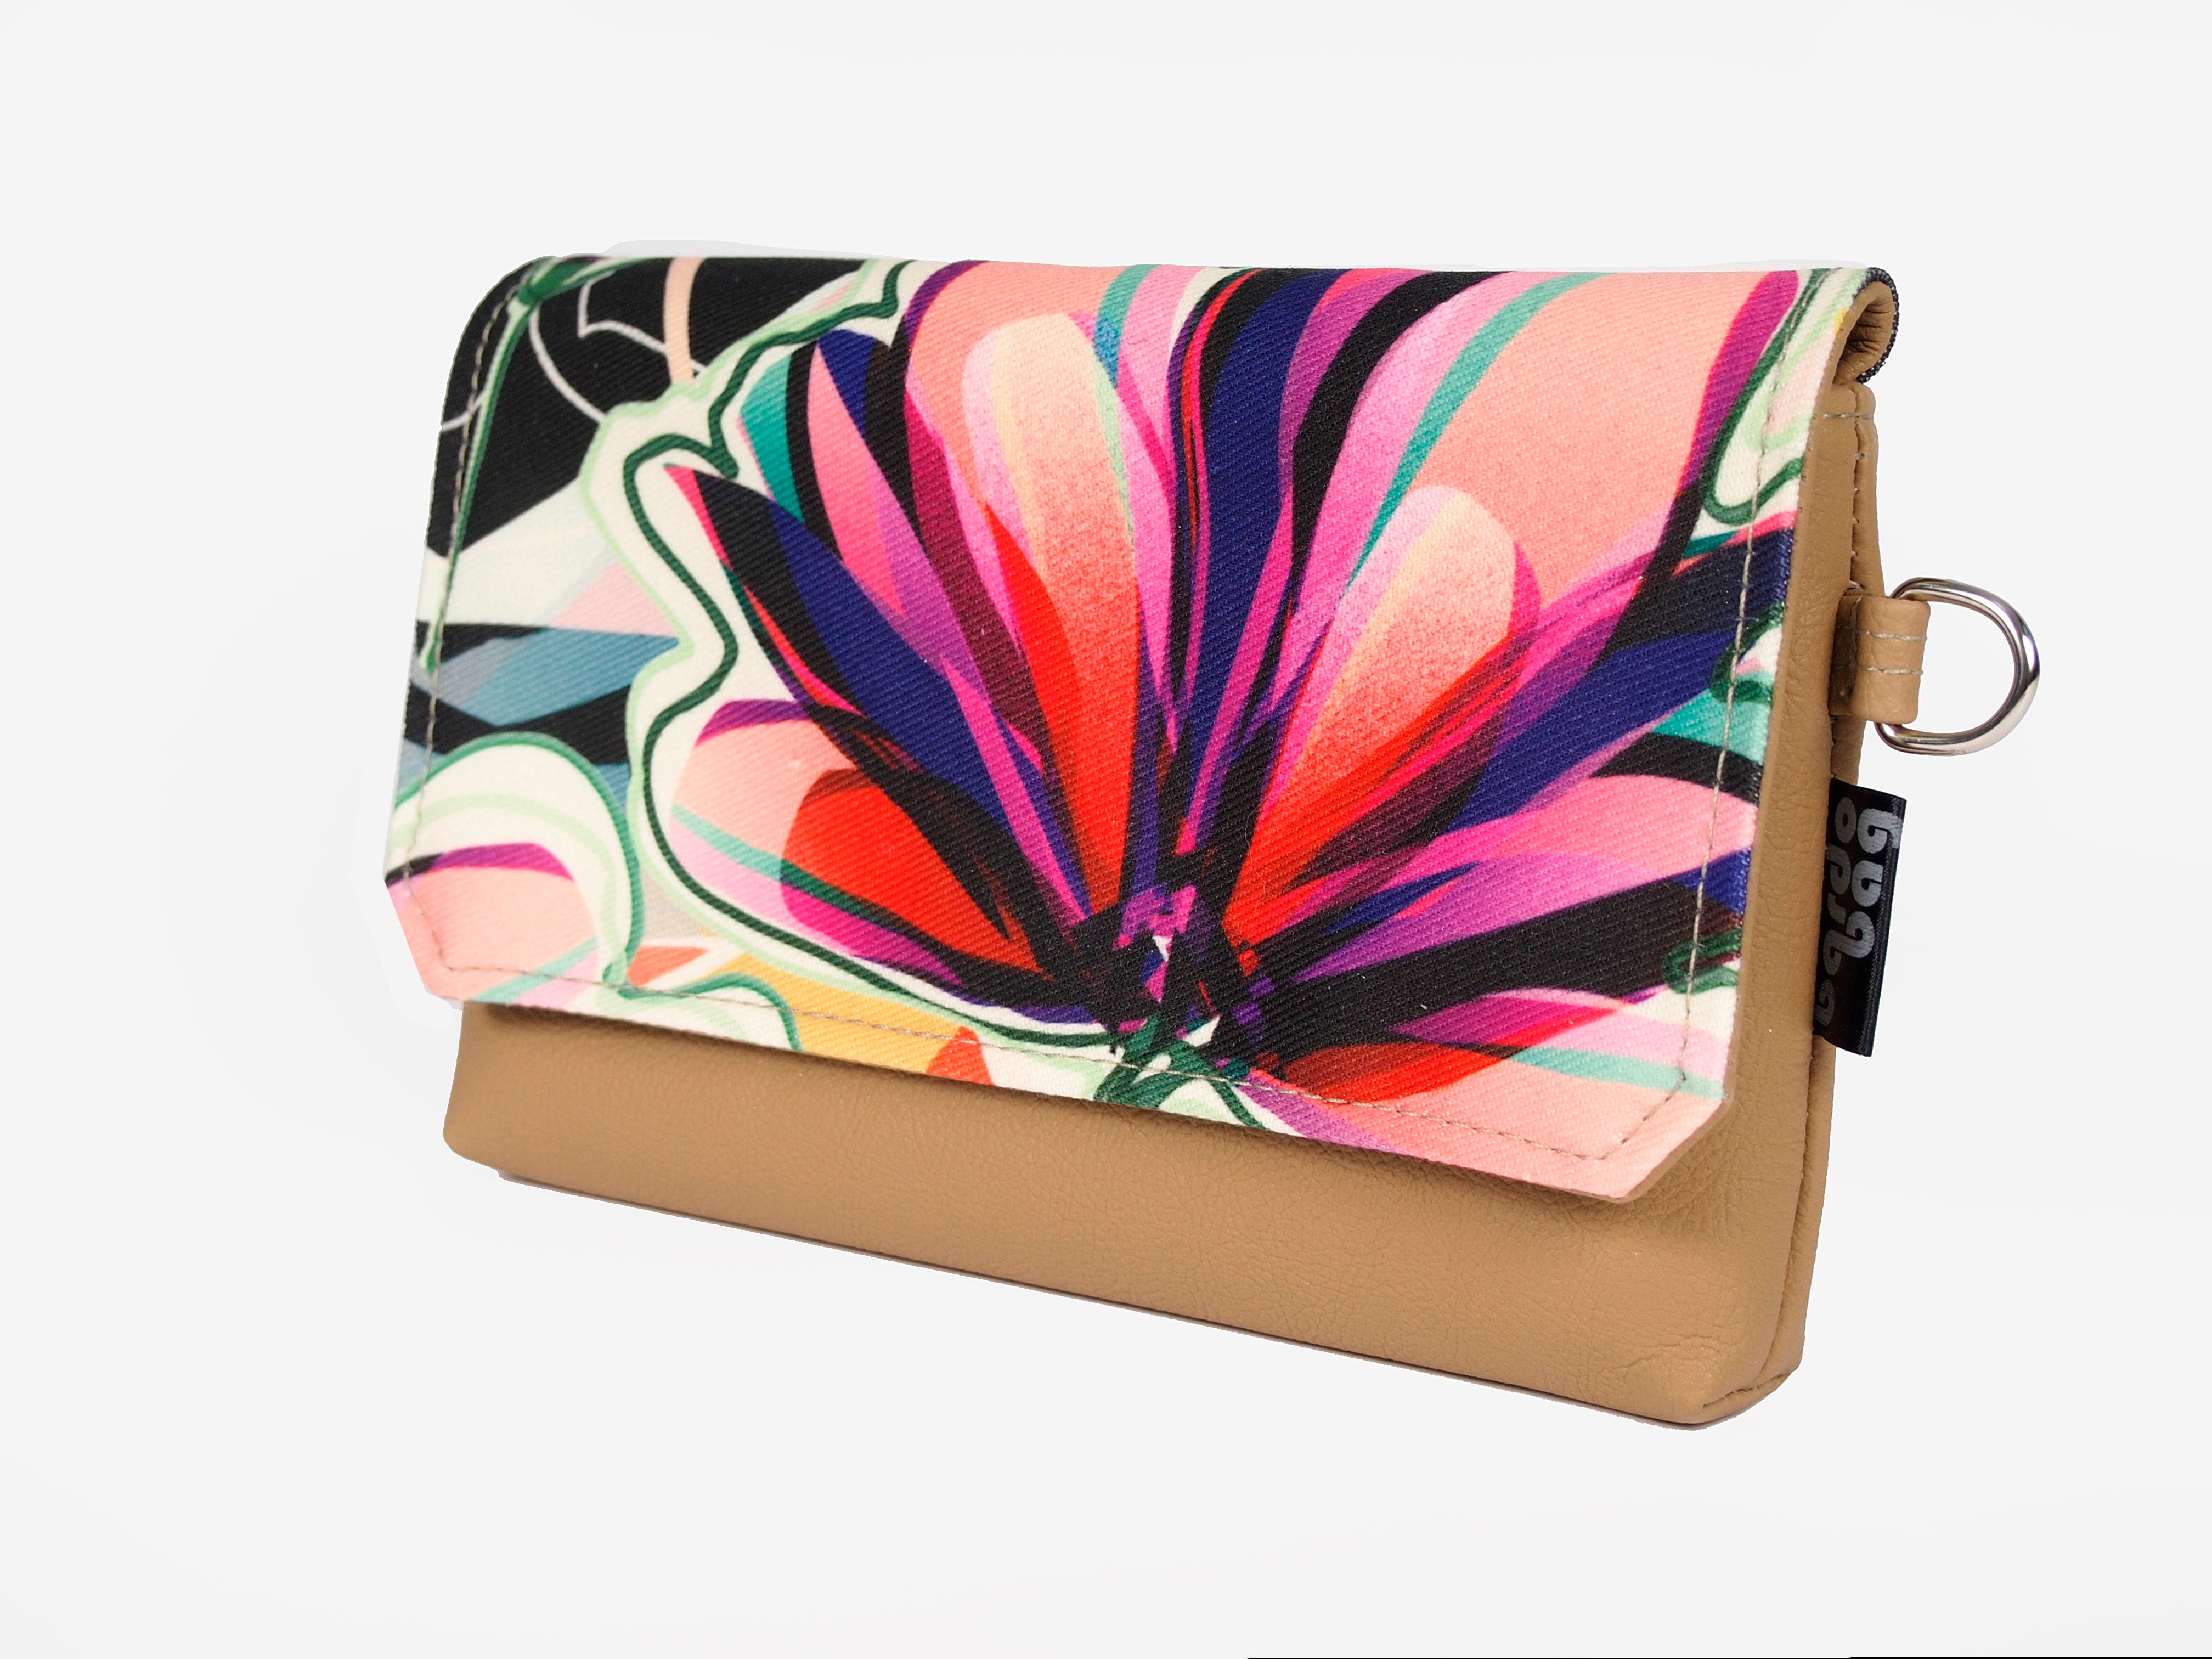 Bardo wallet – Tenderness - Premium wallet from BARDO ART WORKS - Just lv42.00! Shop now at BARDO ART WORKS